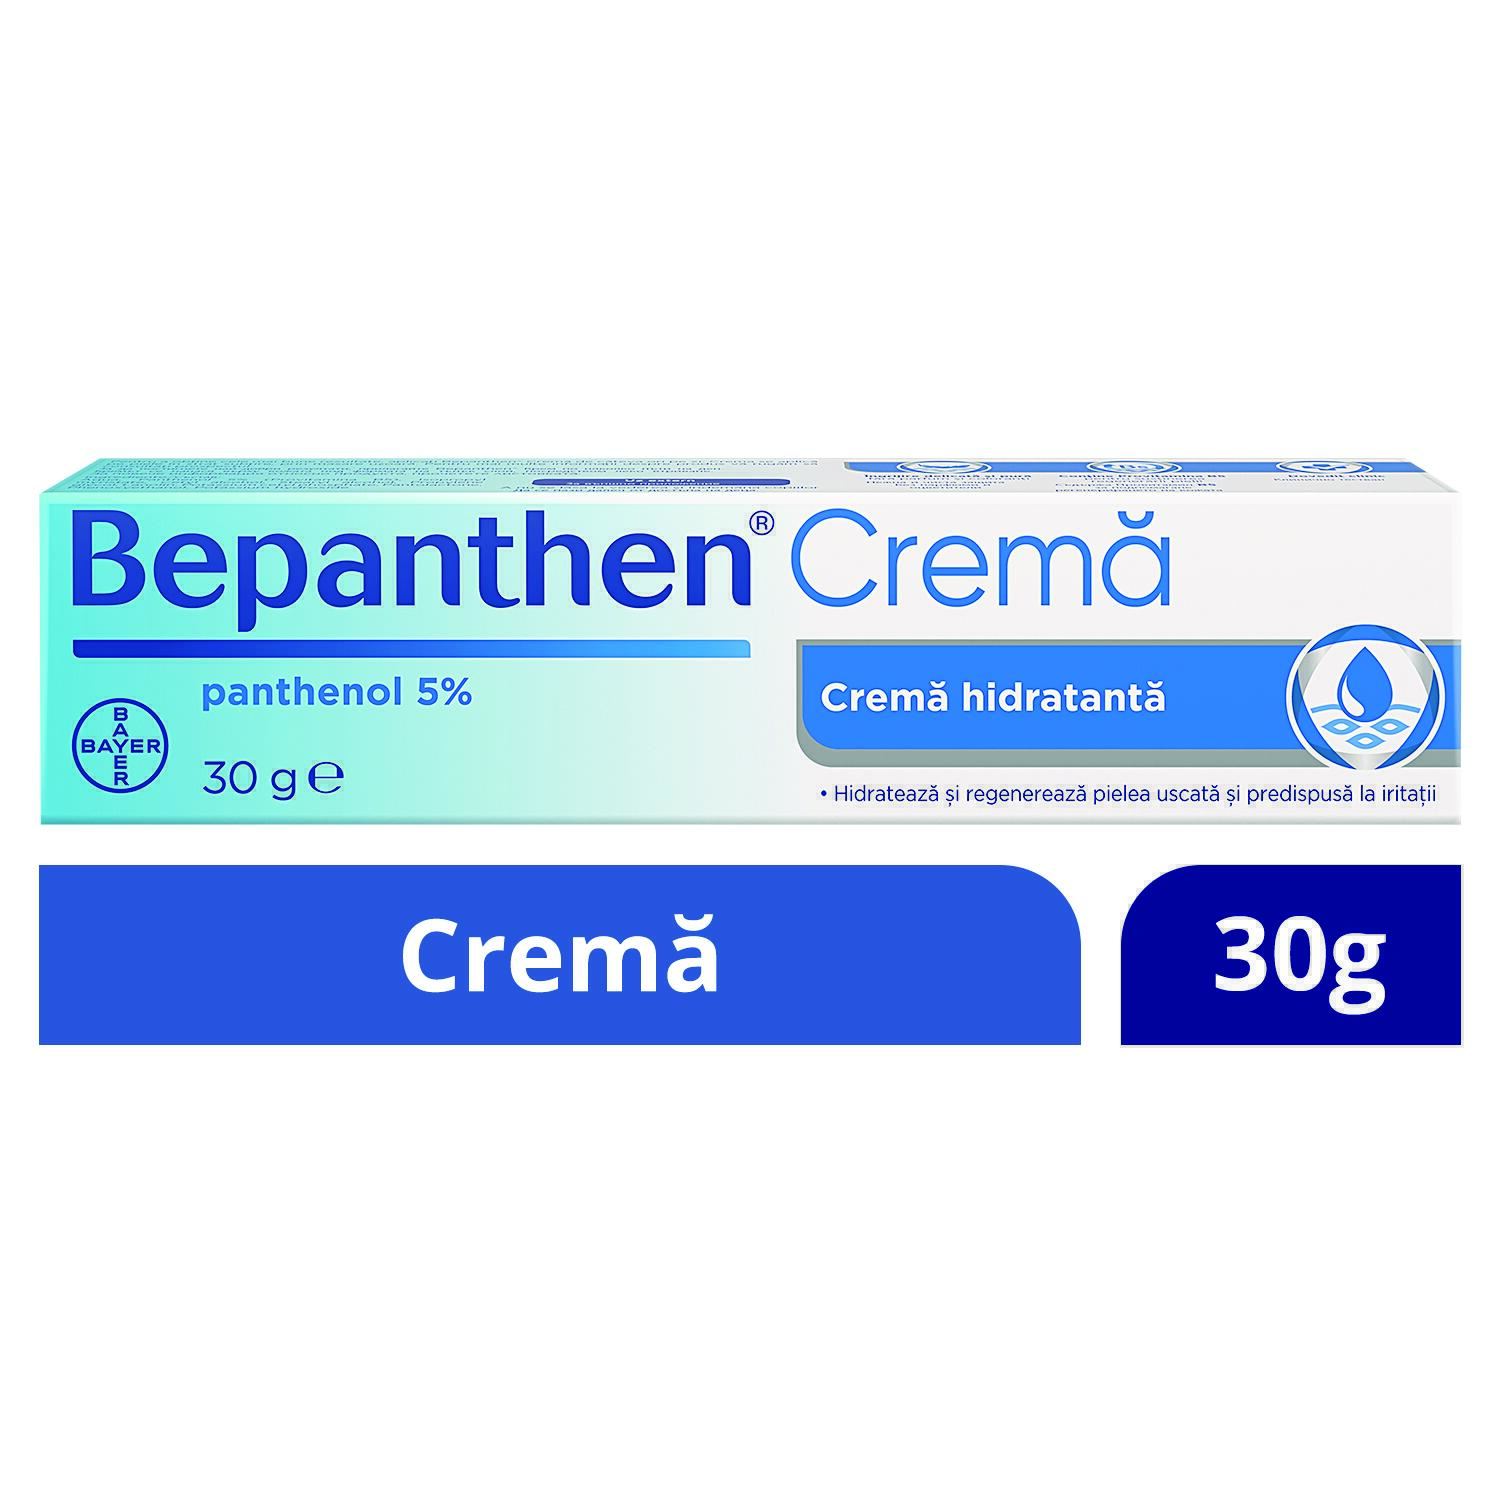 Igiena si ingrijirea copilului - Bepanthen crema, 30 g, Bayer, nordpharm.ro